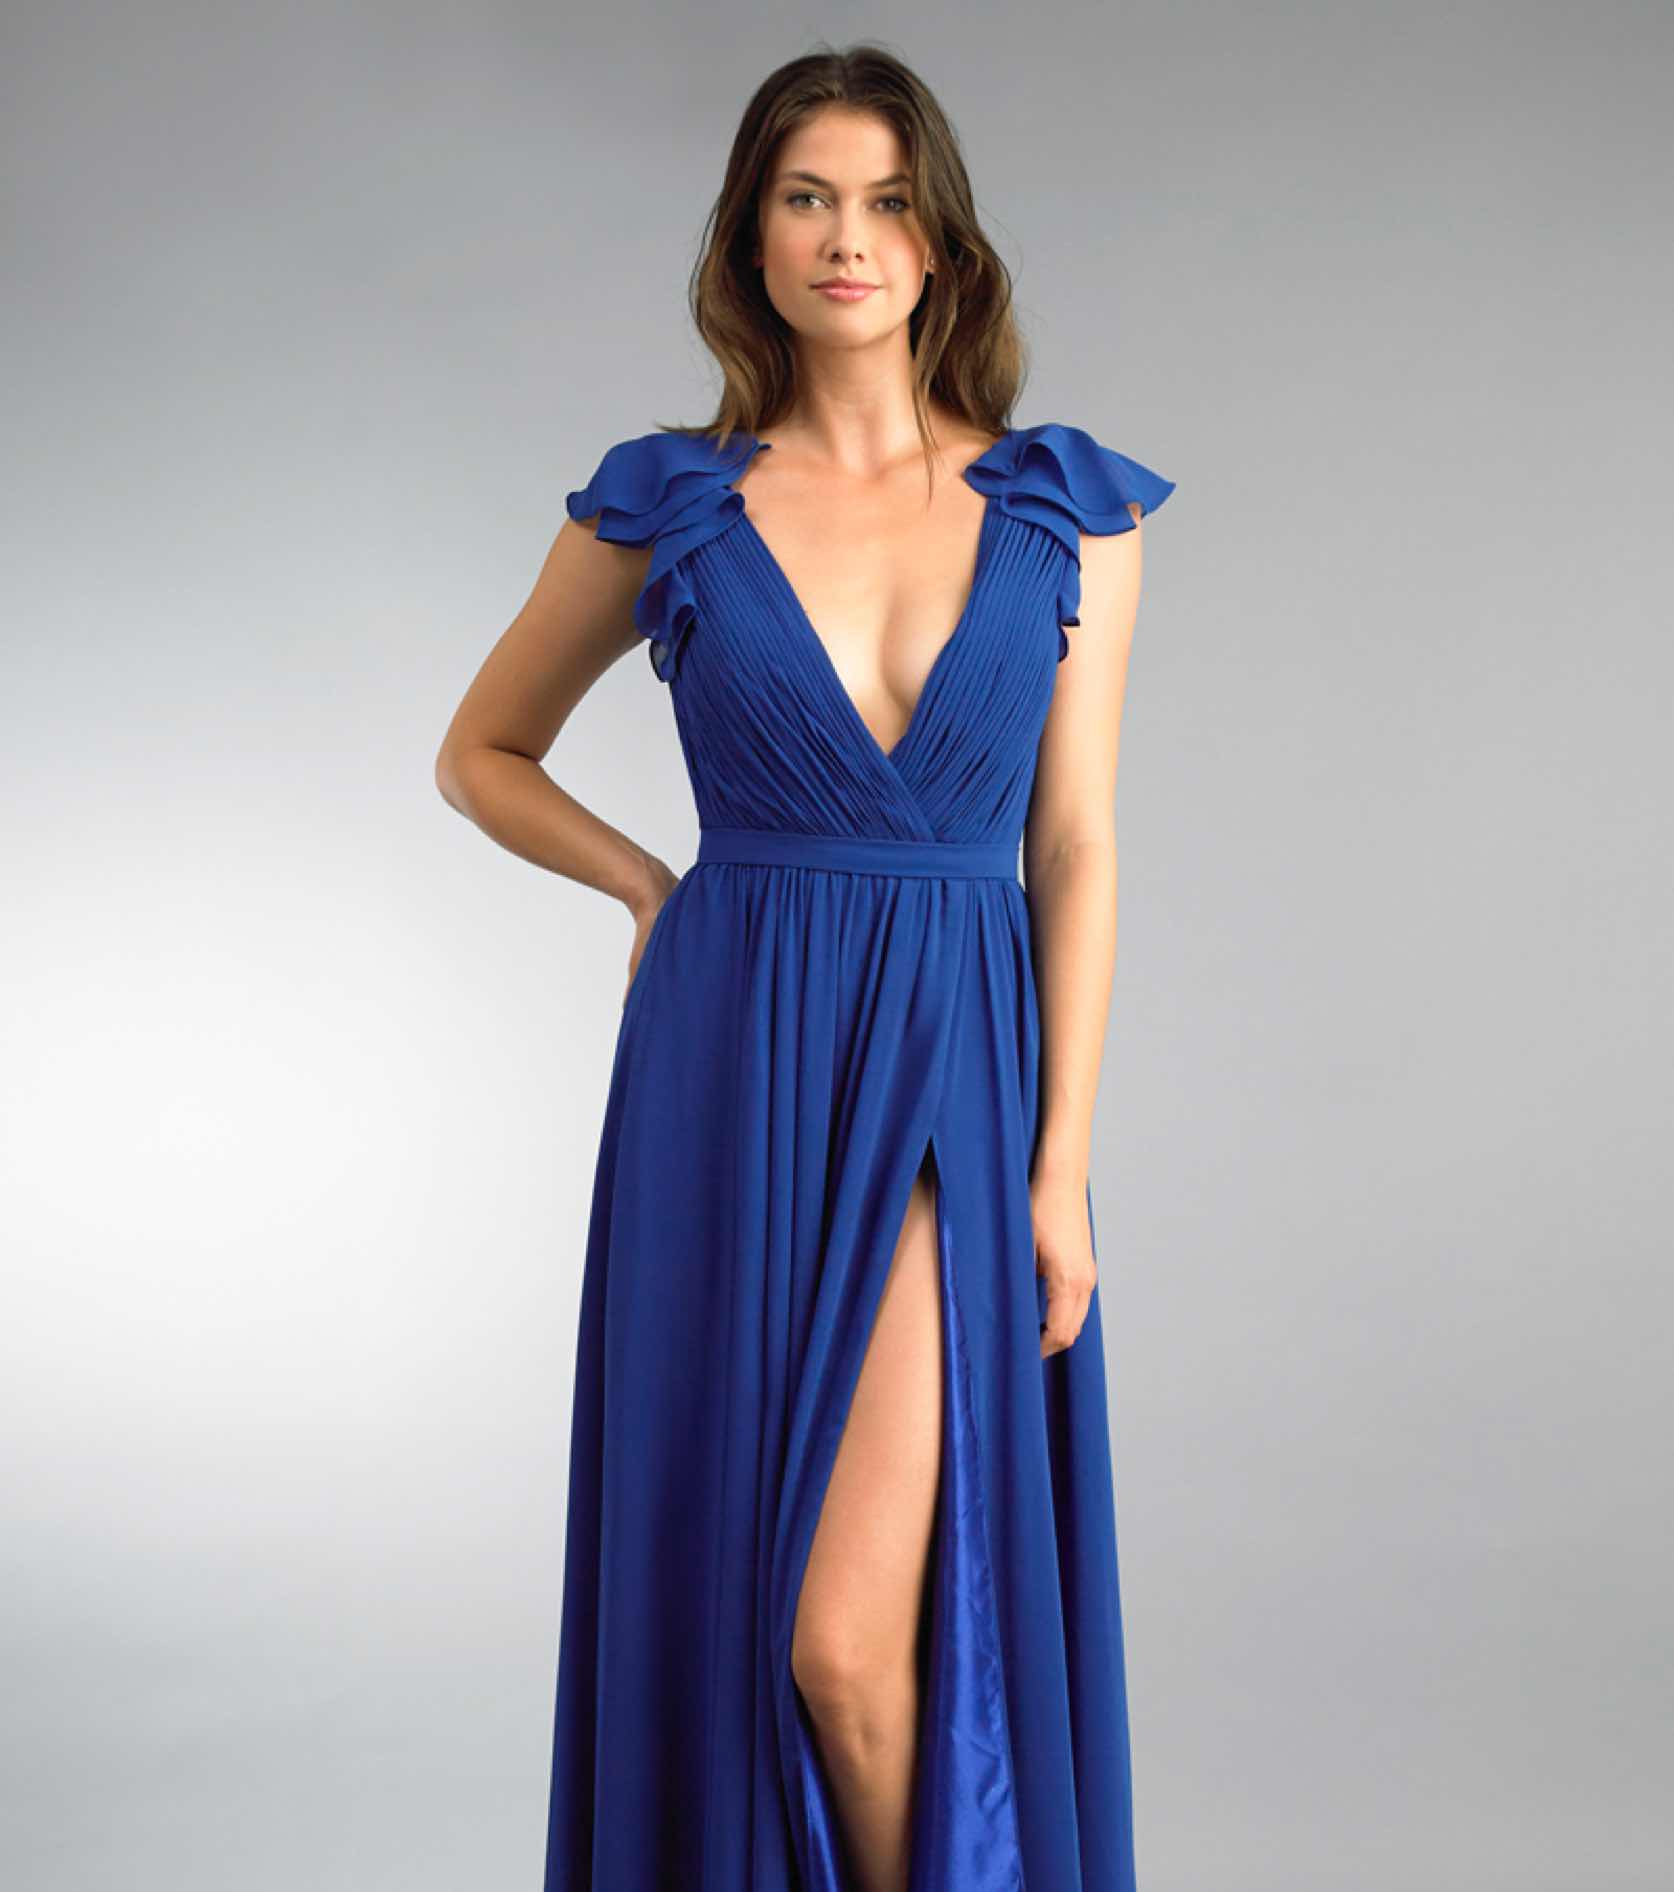 Model in blue Basix Black Label gown